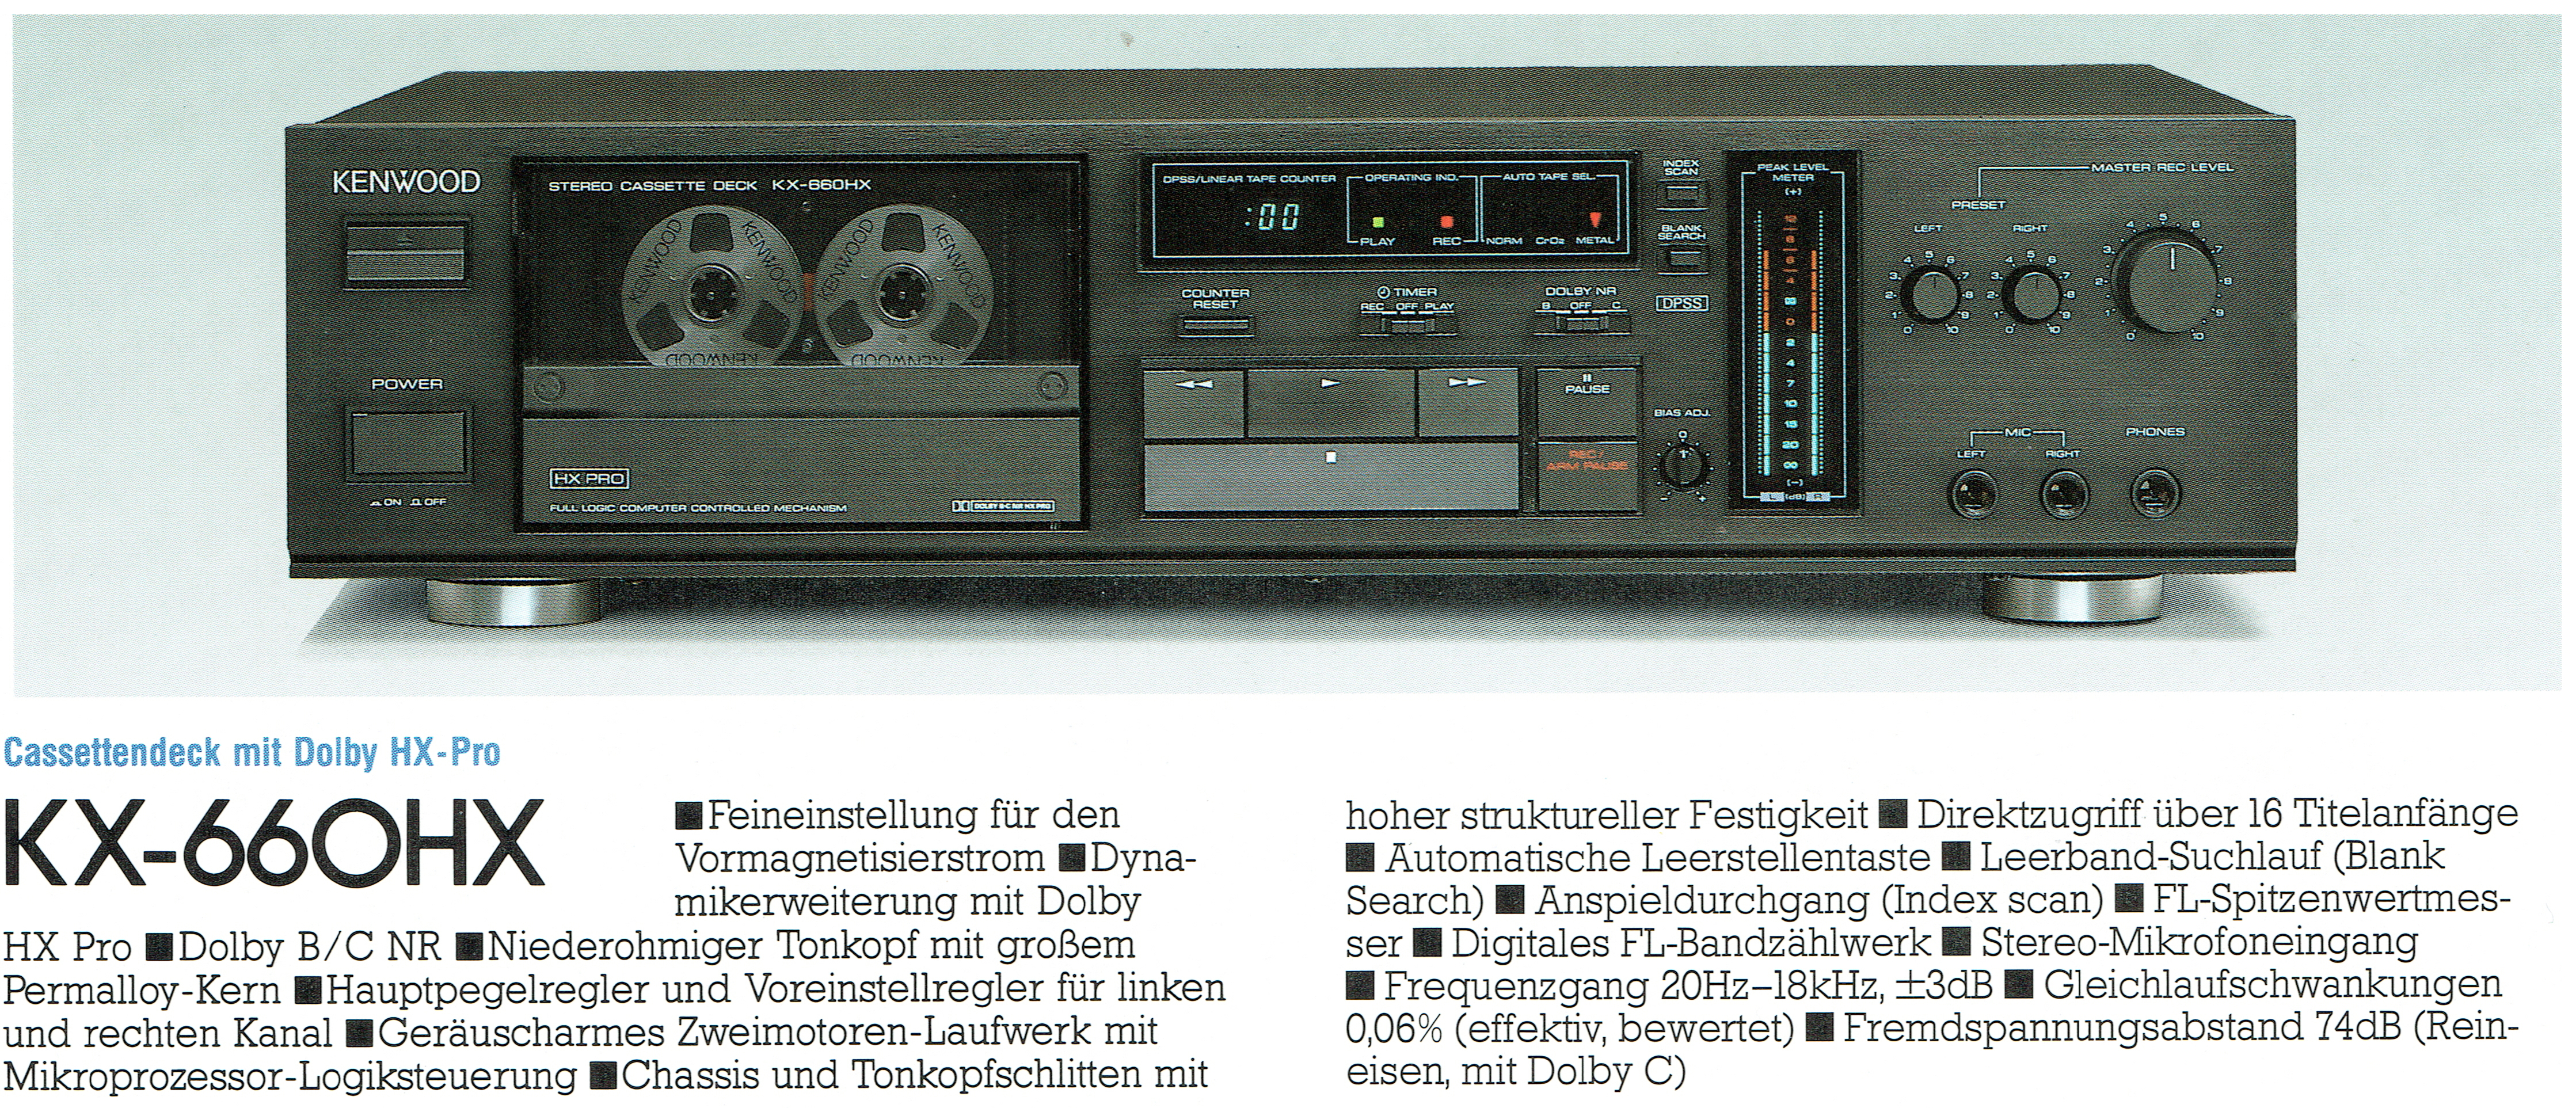 Kenwood KX-660HX (Herbst 1988).jpg